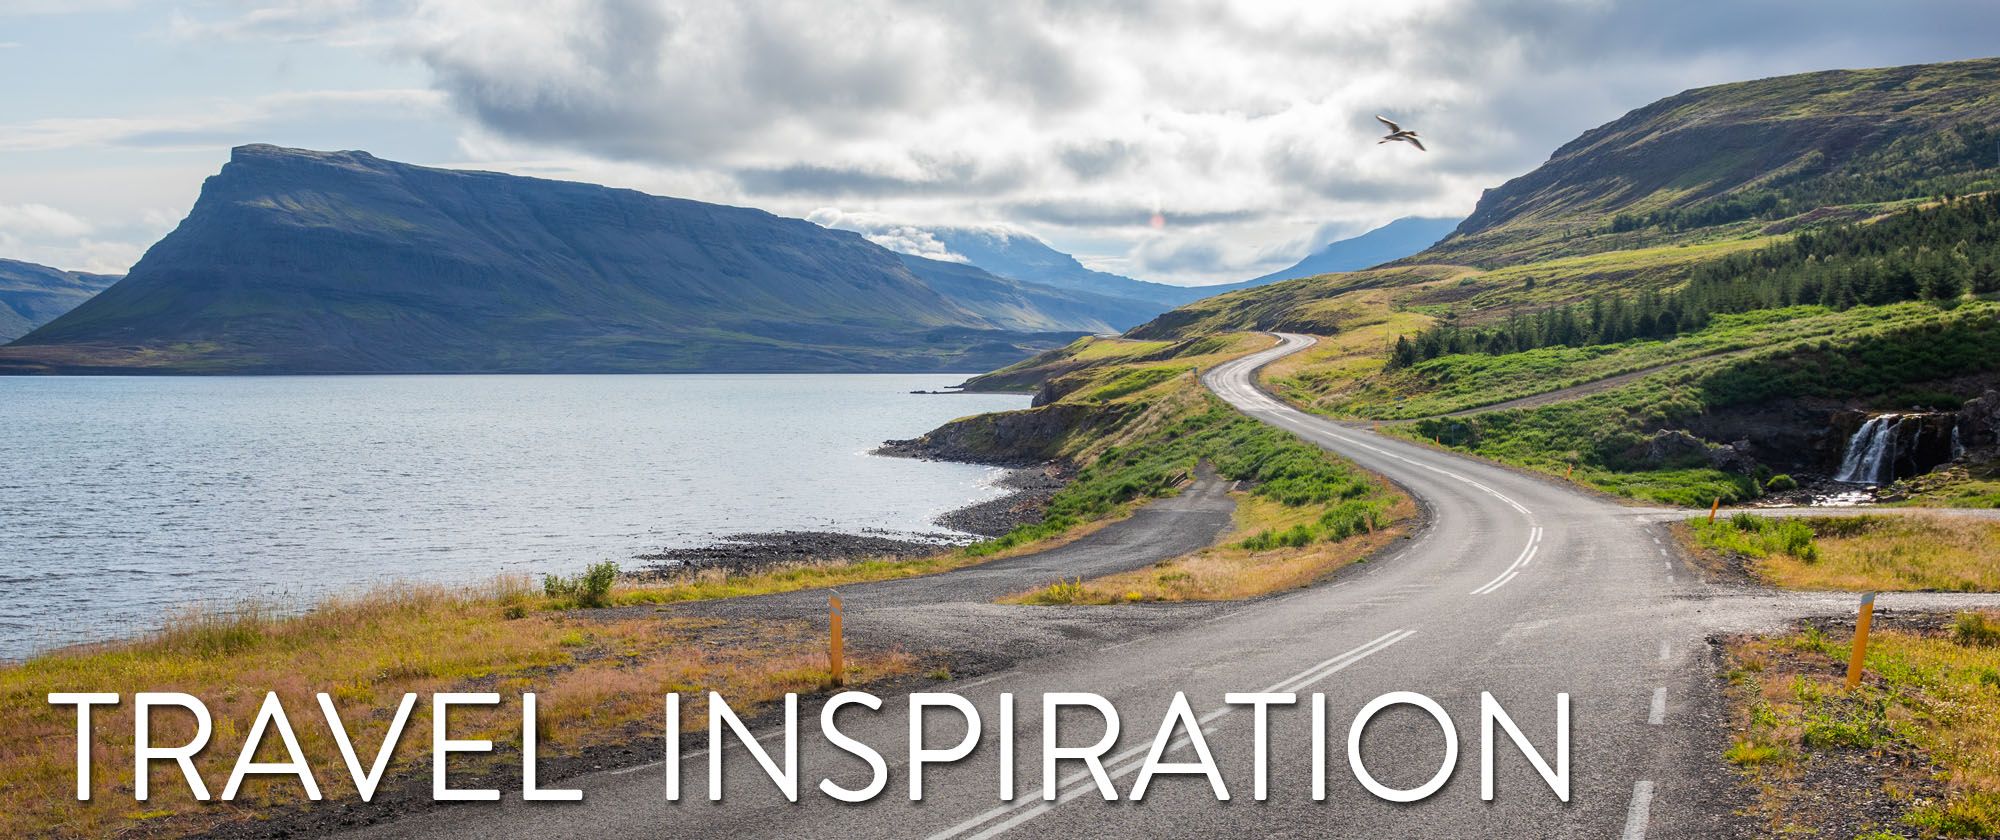 Travel Inspiration